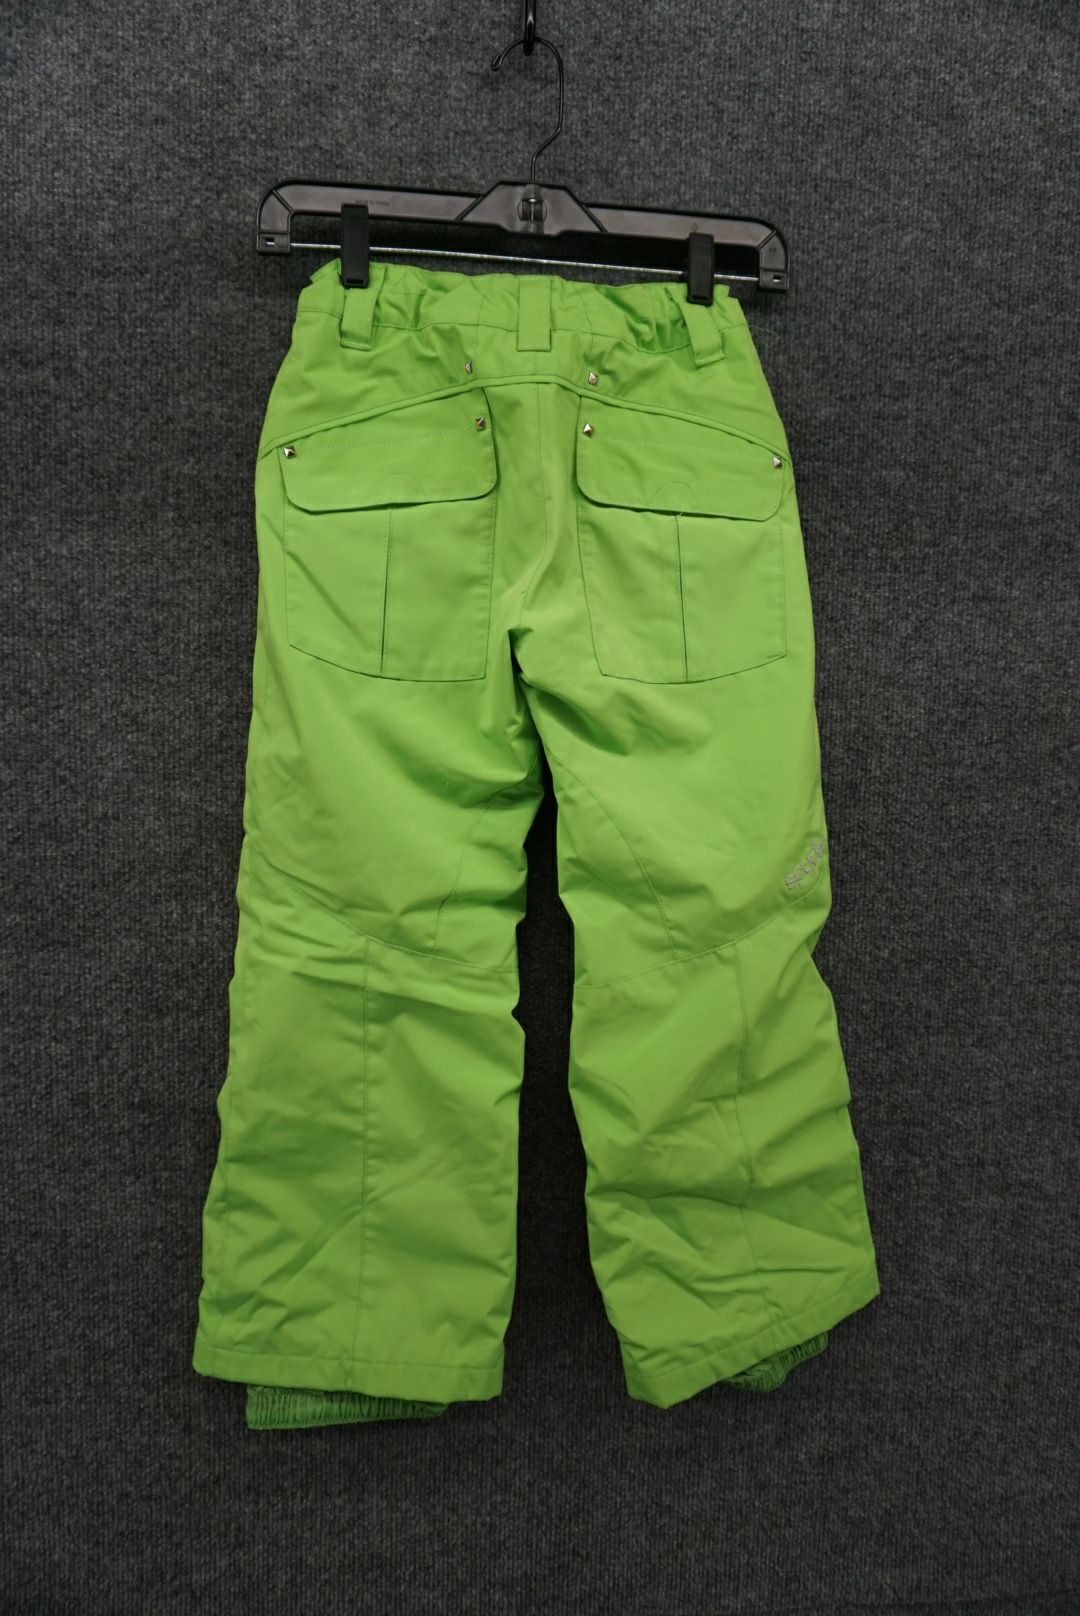 Spyder Size Y8 Youth Ski Pants